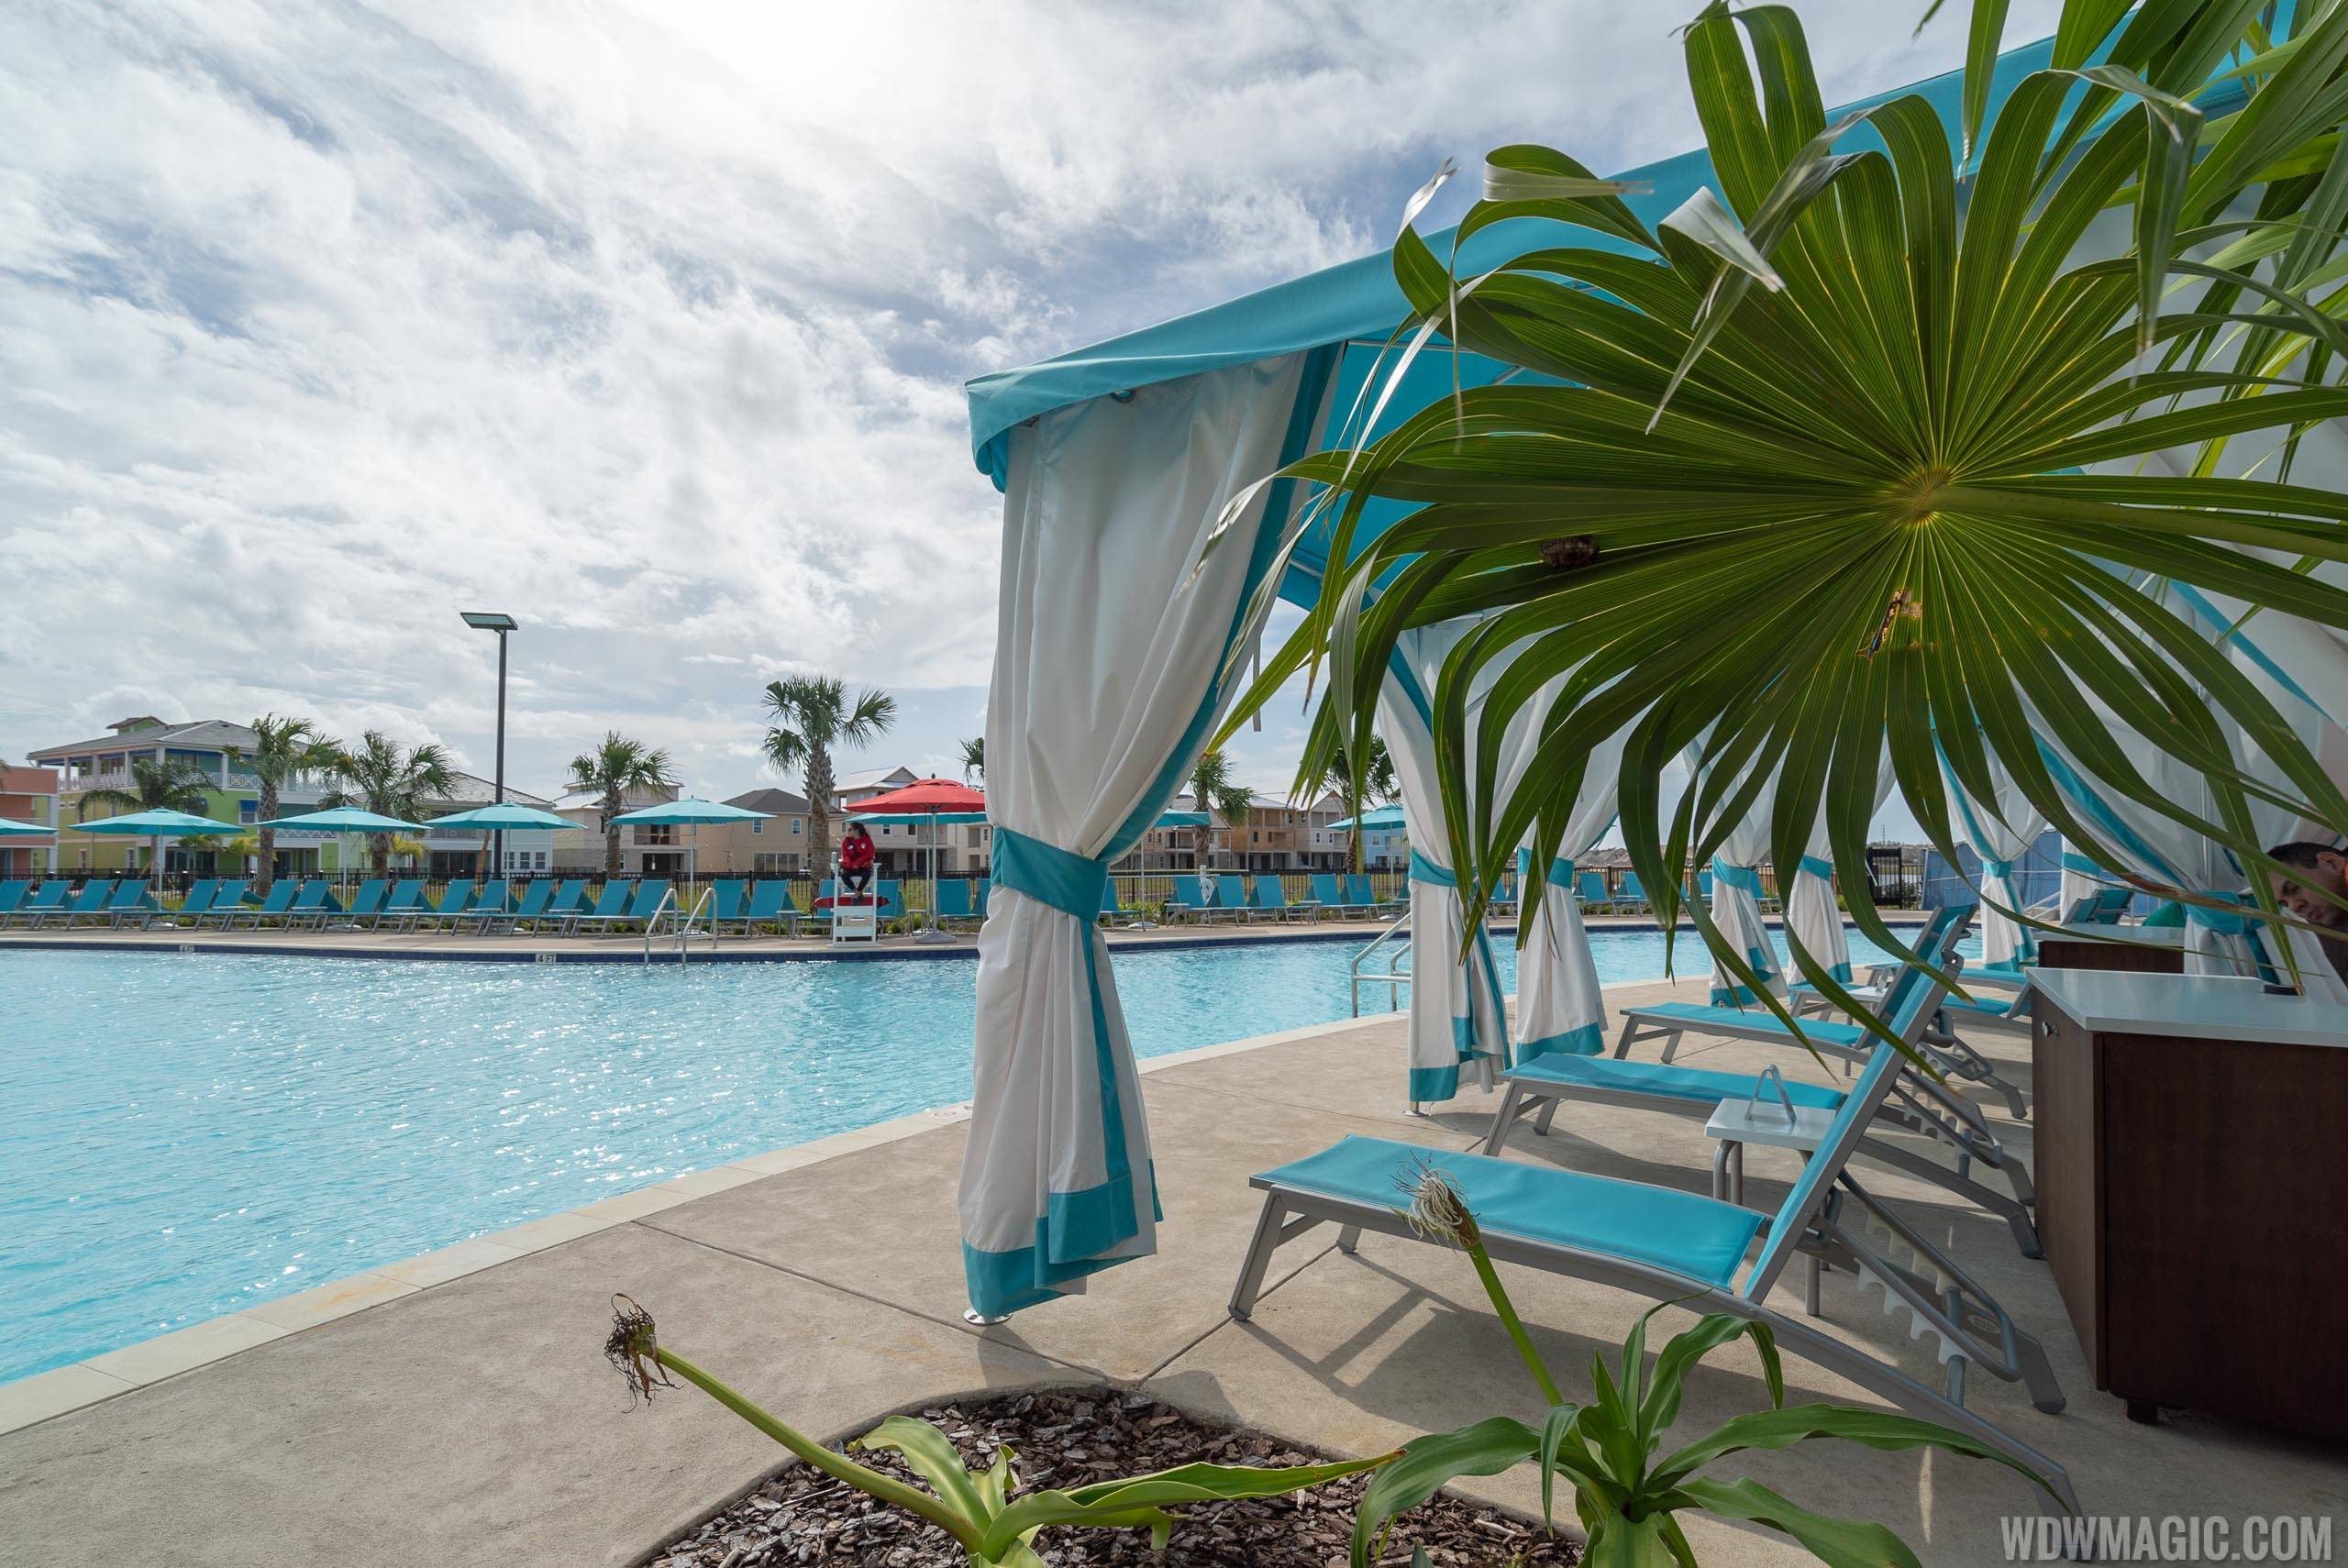 Margaritaville Resort Orlando - Pool area